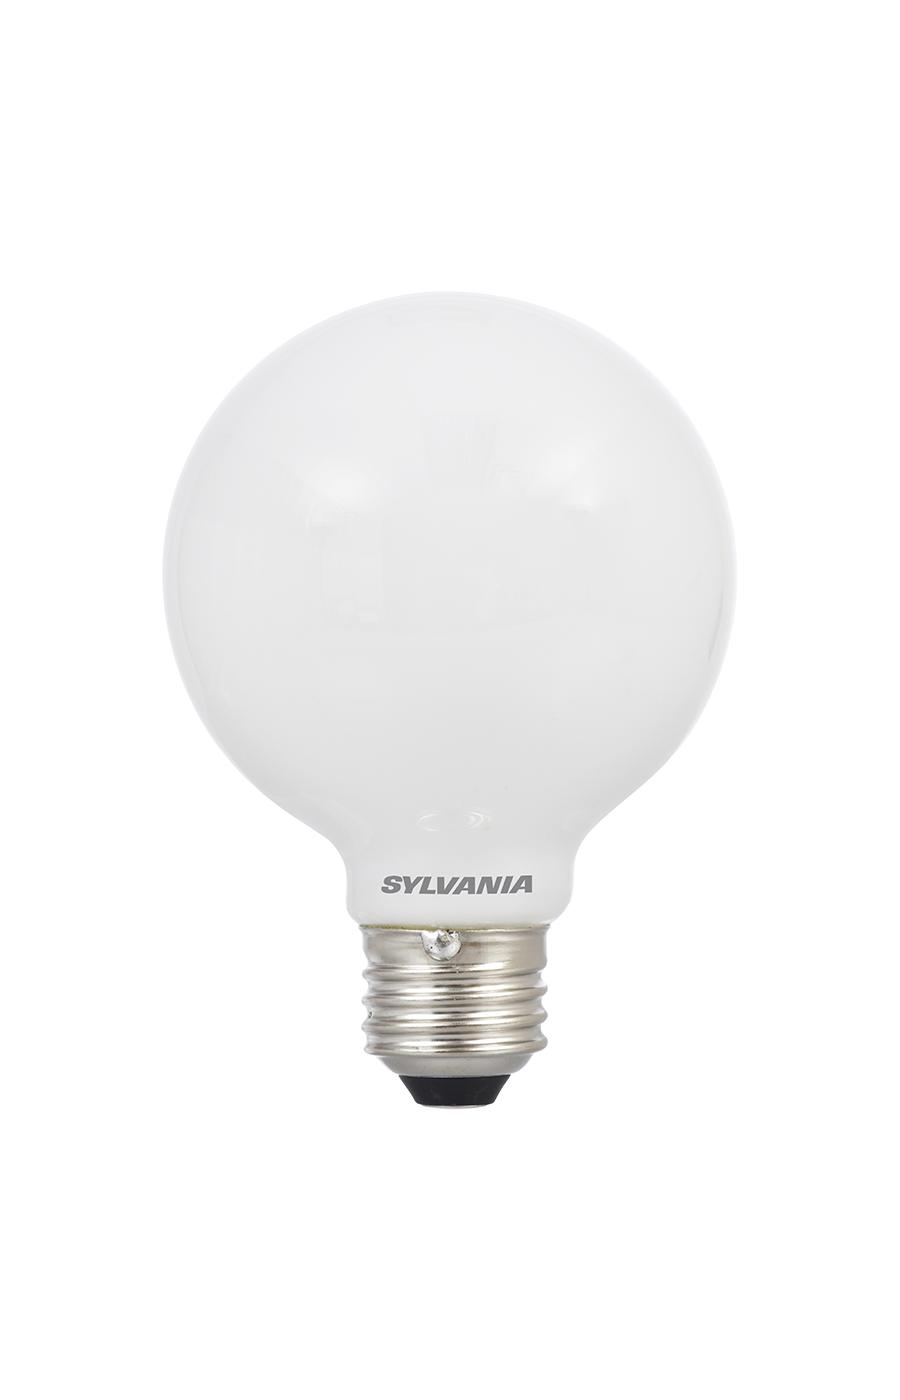 Sylvania TruWave G25 60-Watt Frosted LED Light Bulbs - Soft White; image 2 of 2